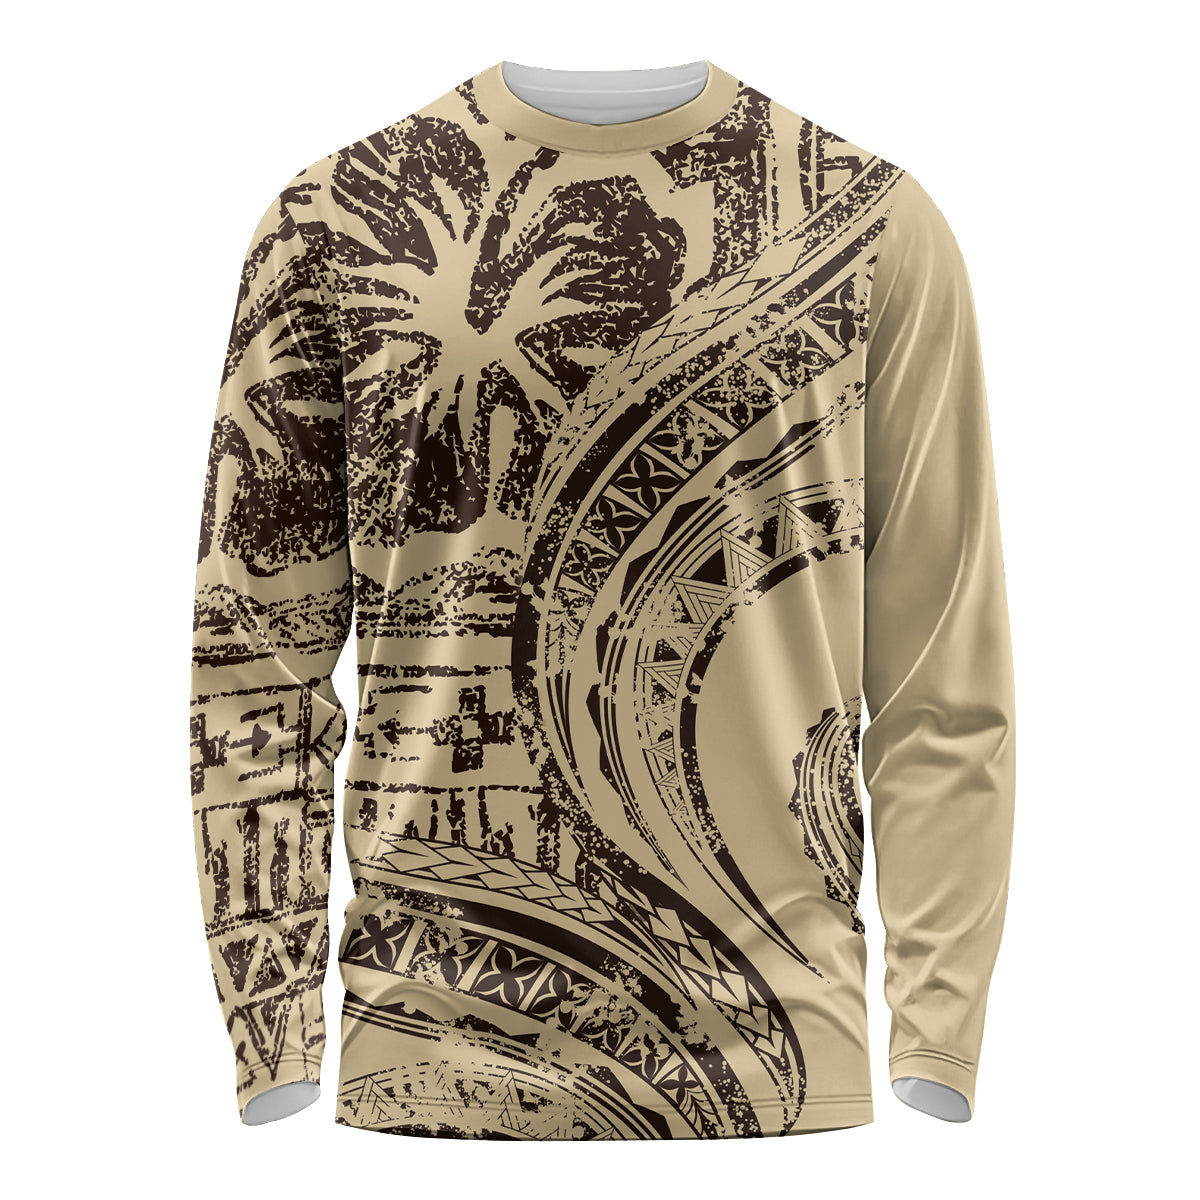 Hawaiian Hibiscus Tribal Vintage Motif Long Sleeve Shirt Ver 3